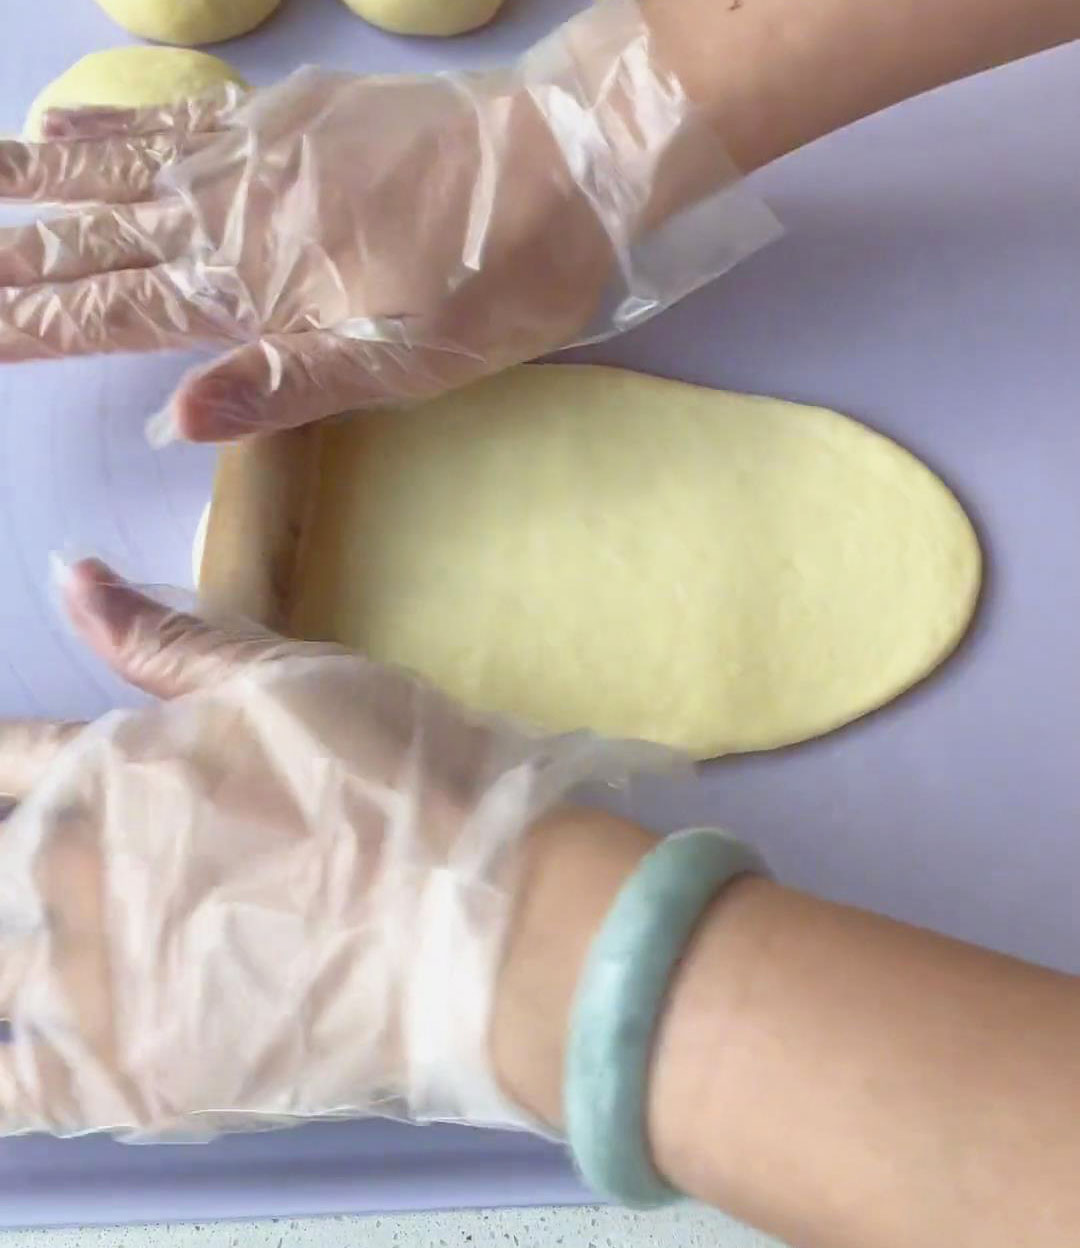 flatten each piece using a rolling pin to make a flat, oblong shaped dough wrapper